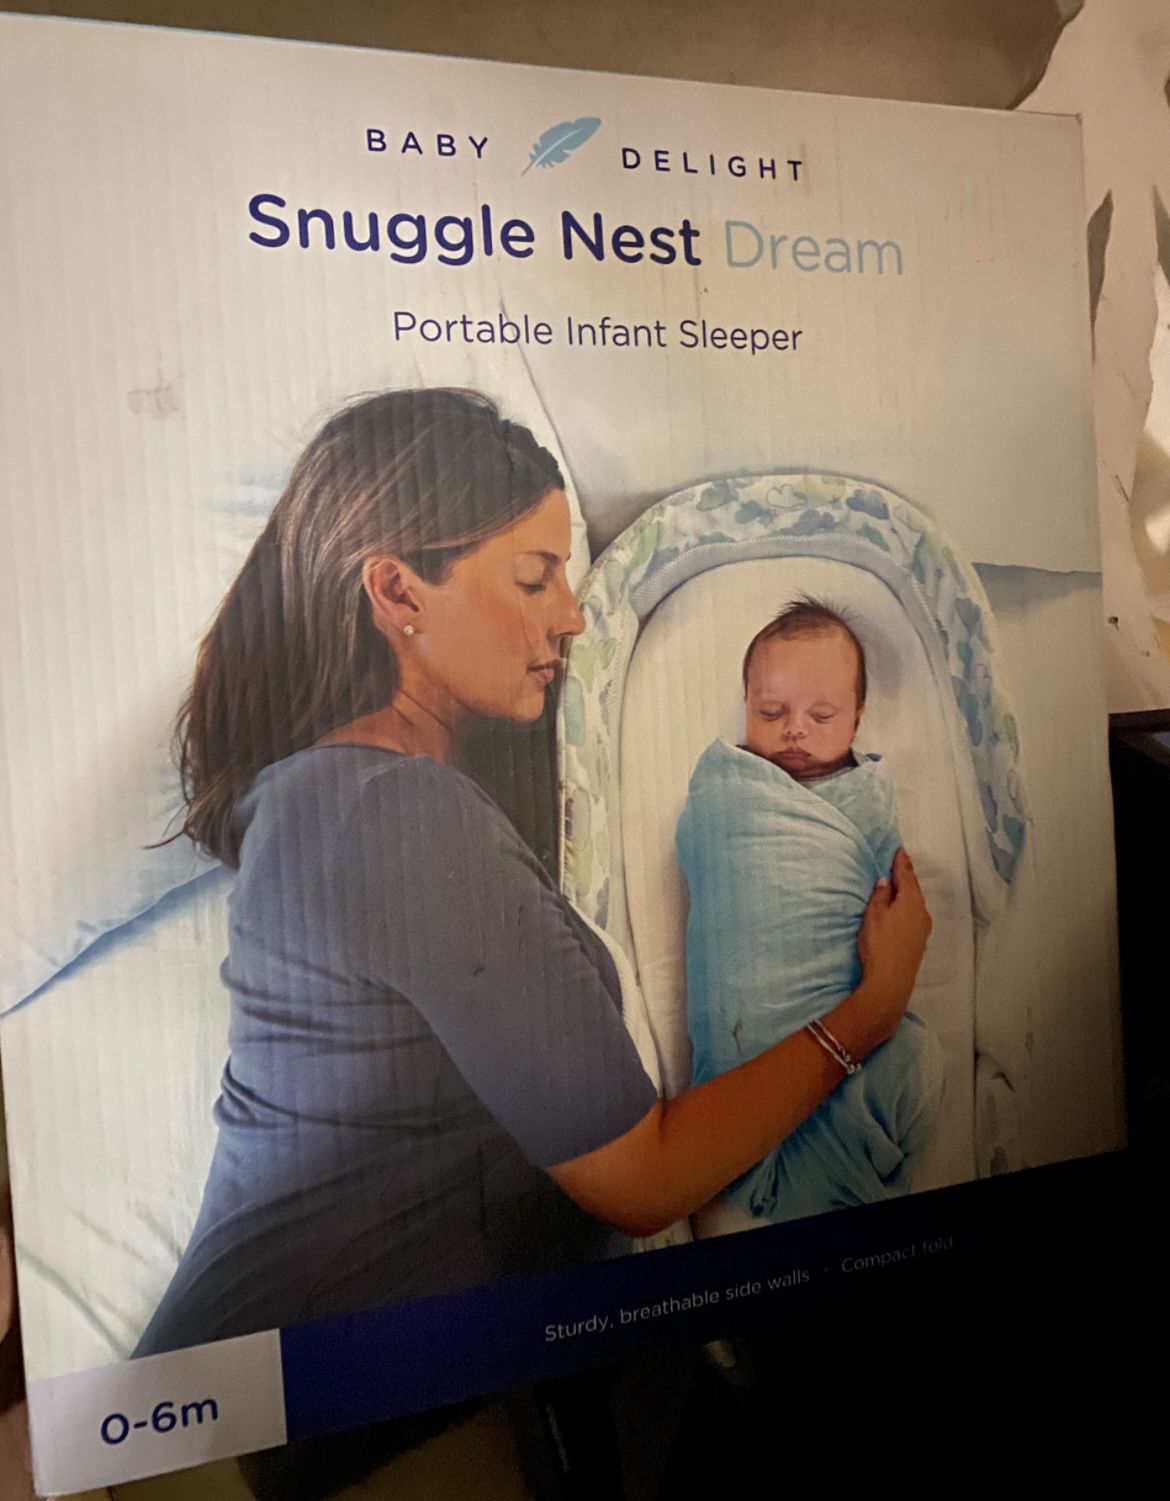 BRAND NEW Snuggle nest dream